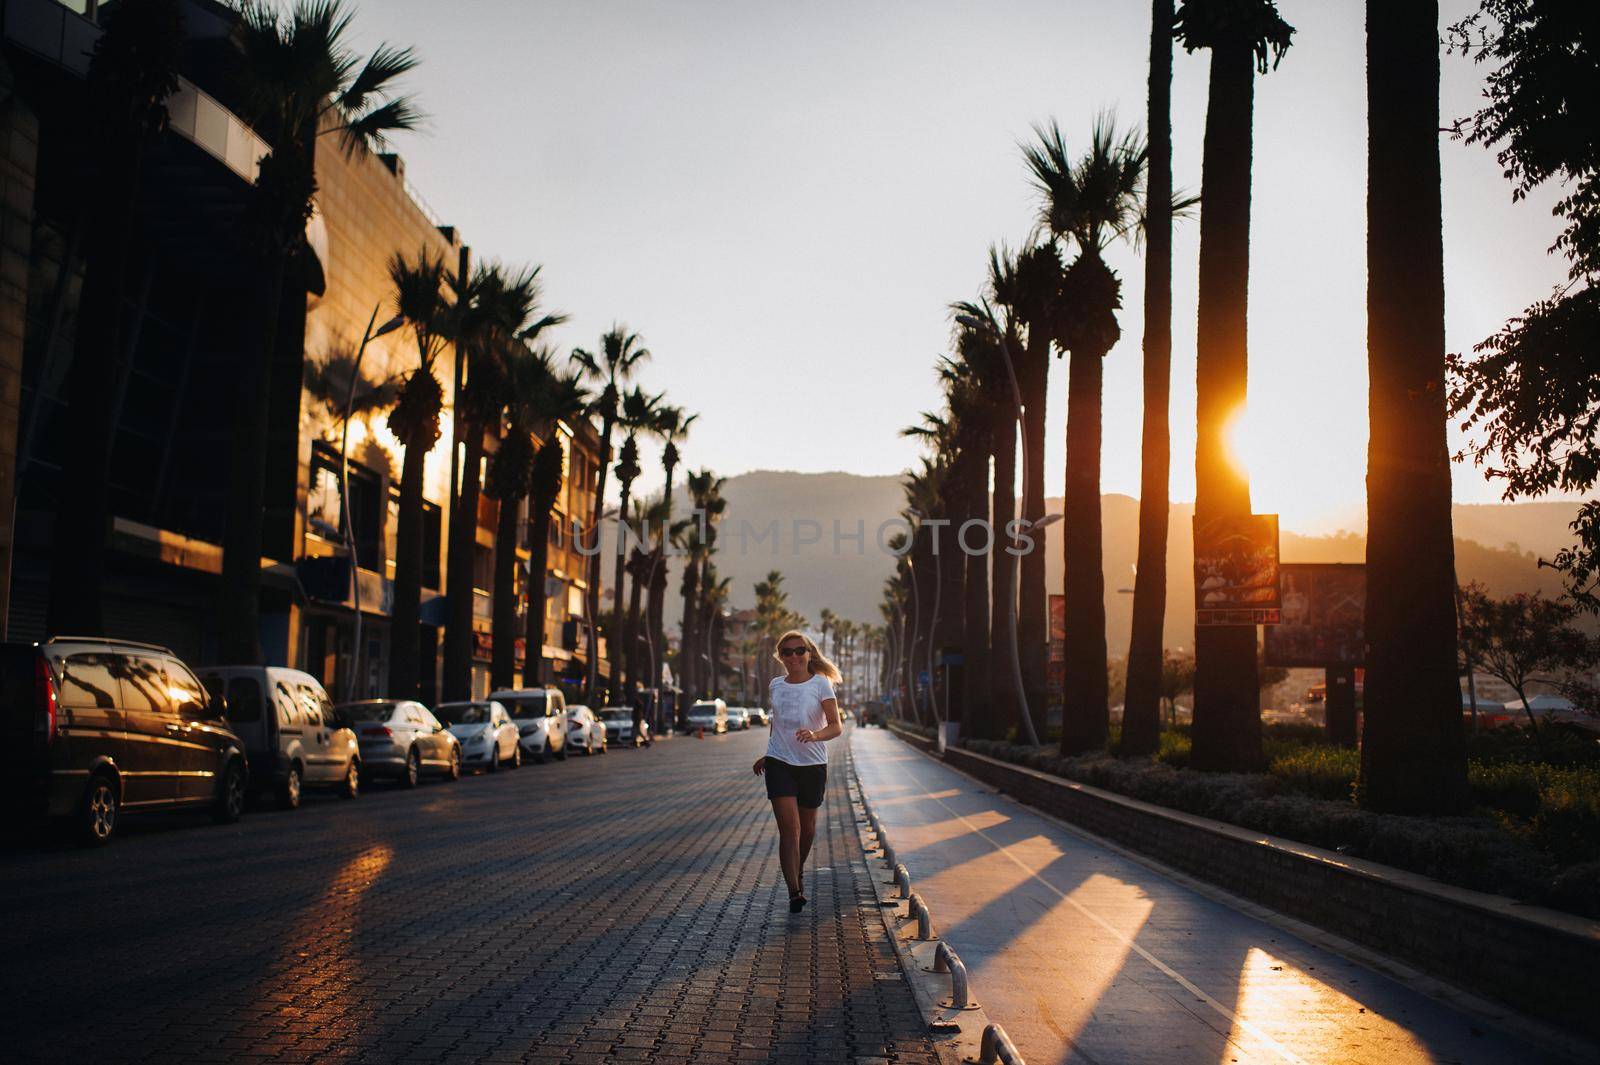 morning run of a young woman along the promenade.